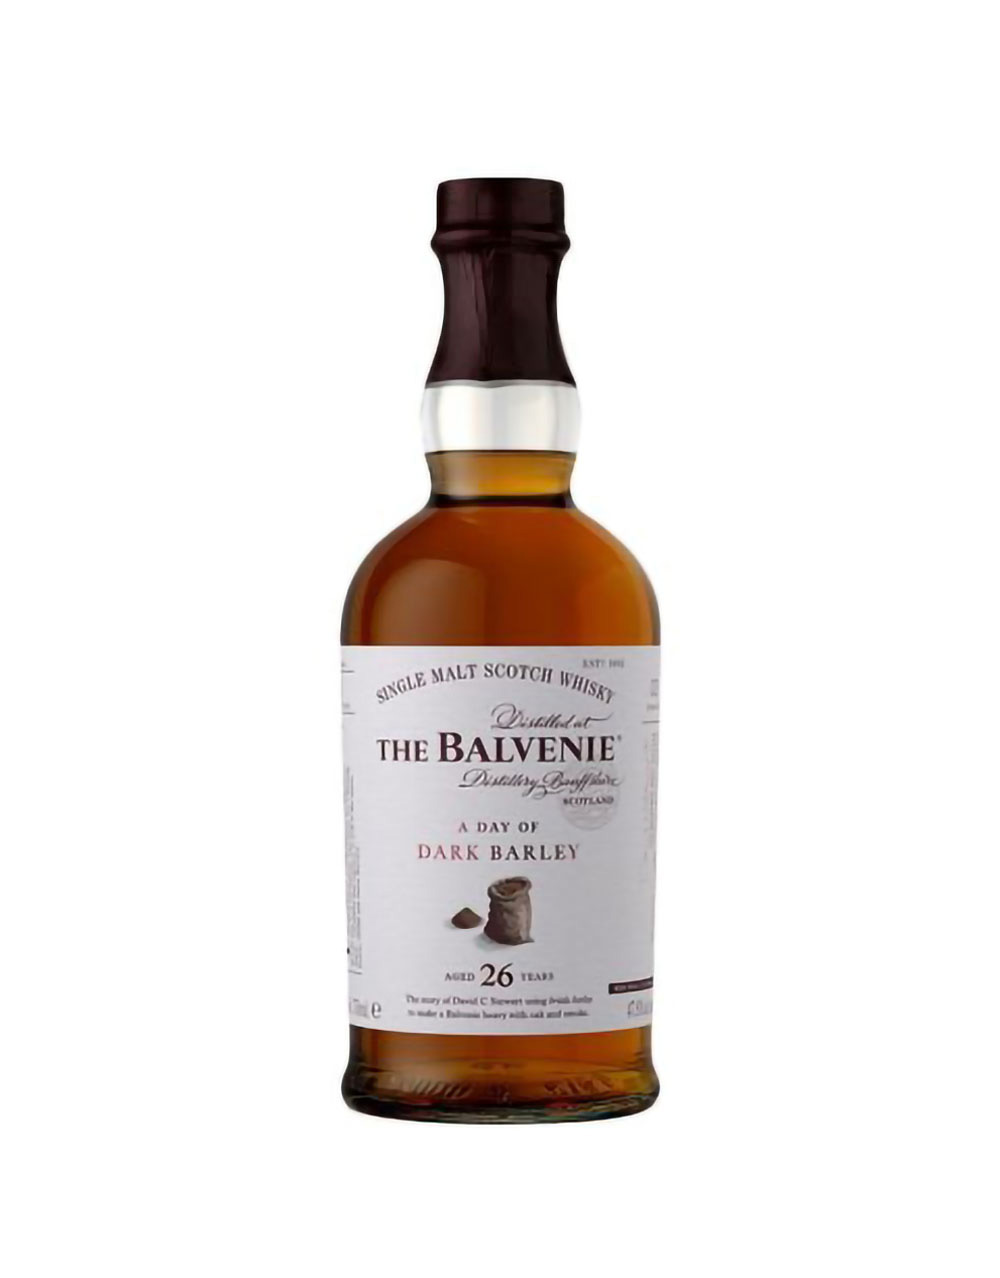 The Balvenie A Day of Dark Barley 26 Year Old Single Malt Scotch Whisky